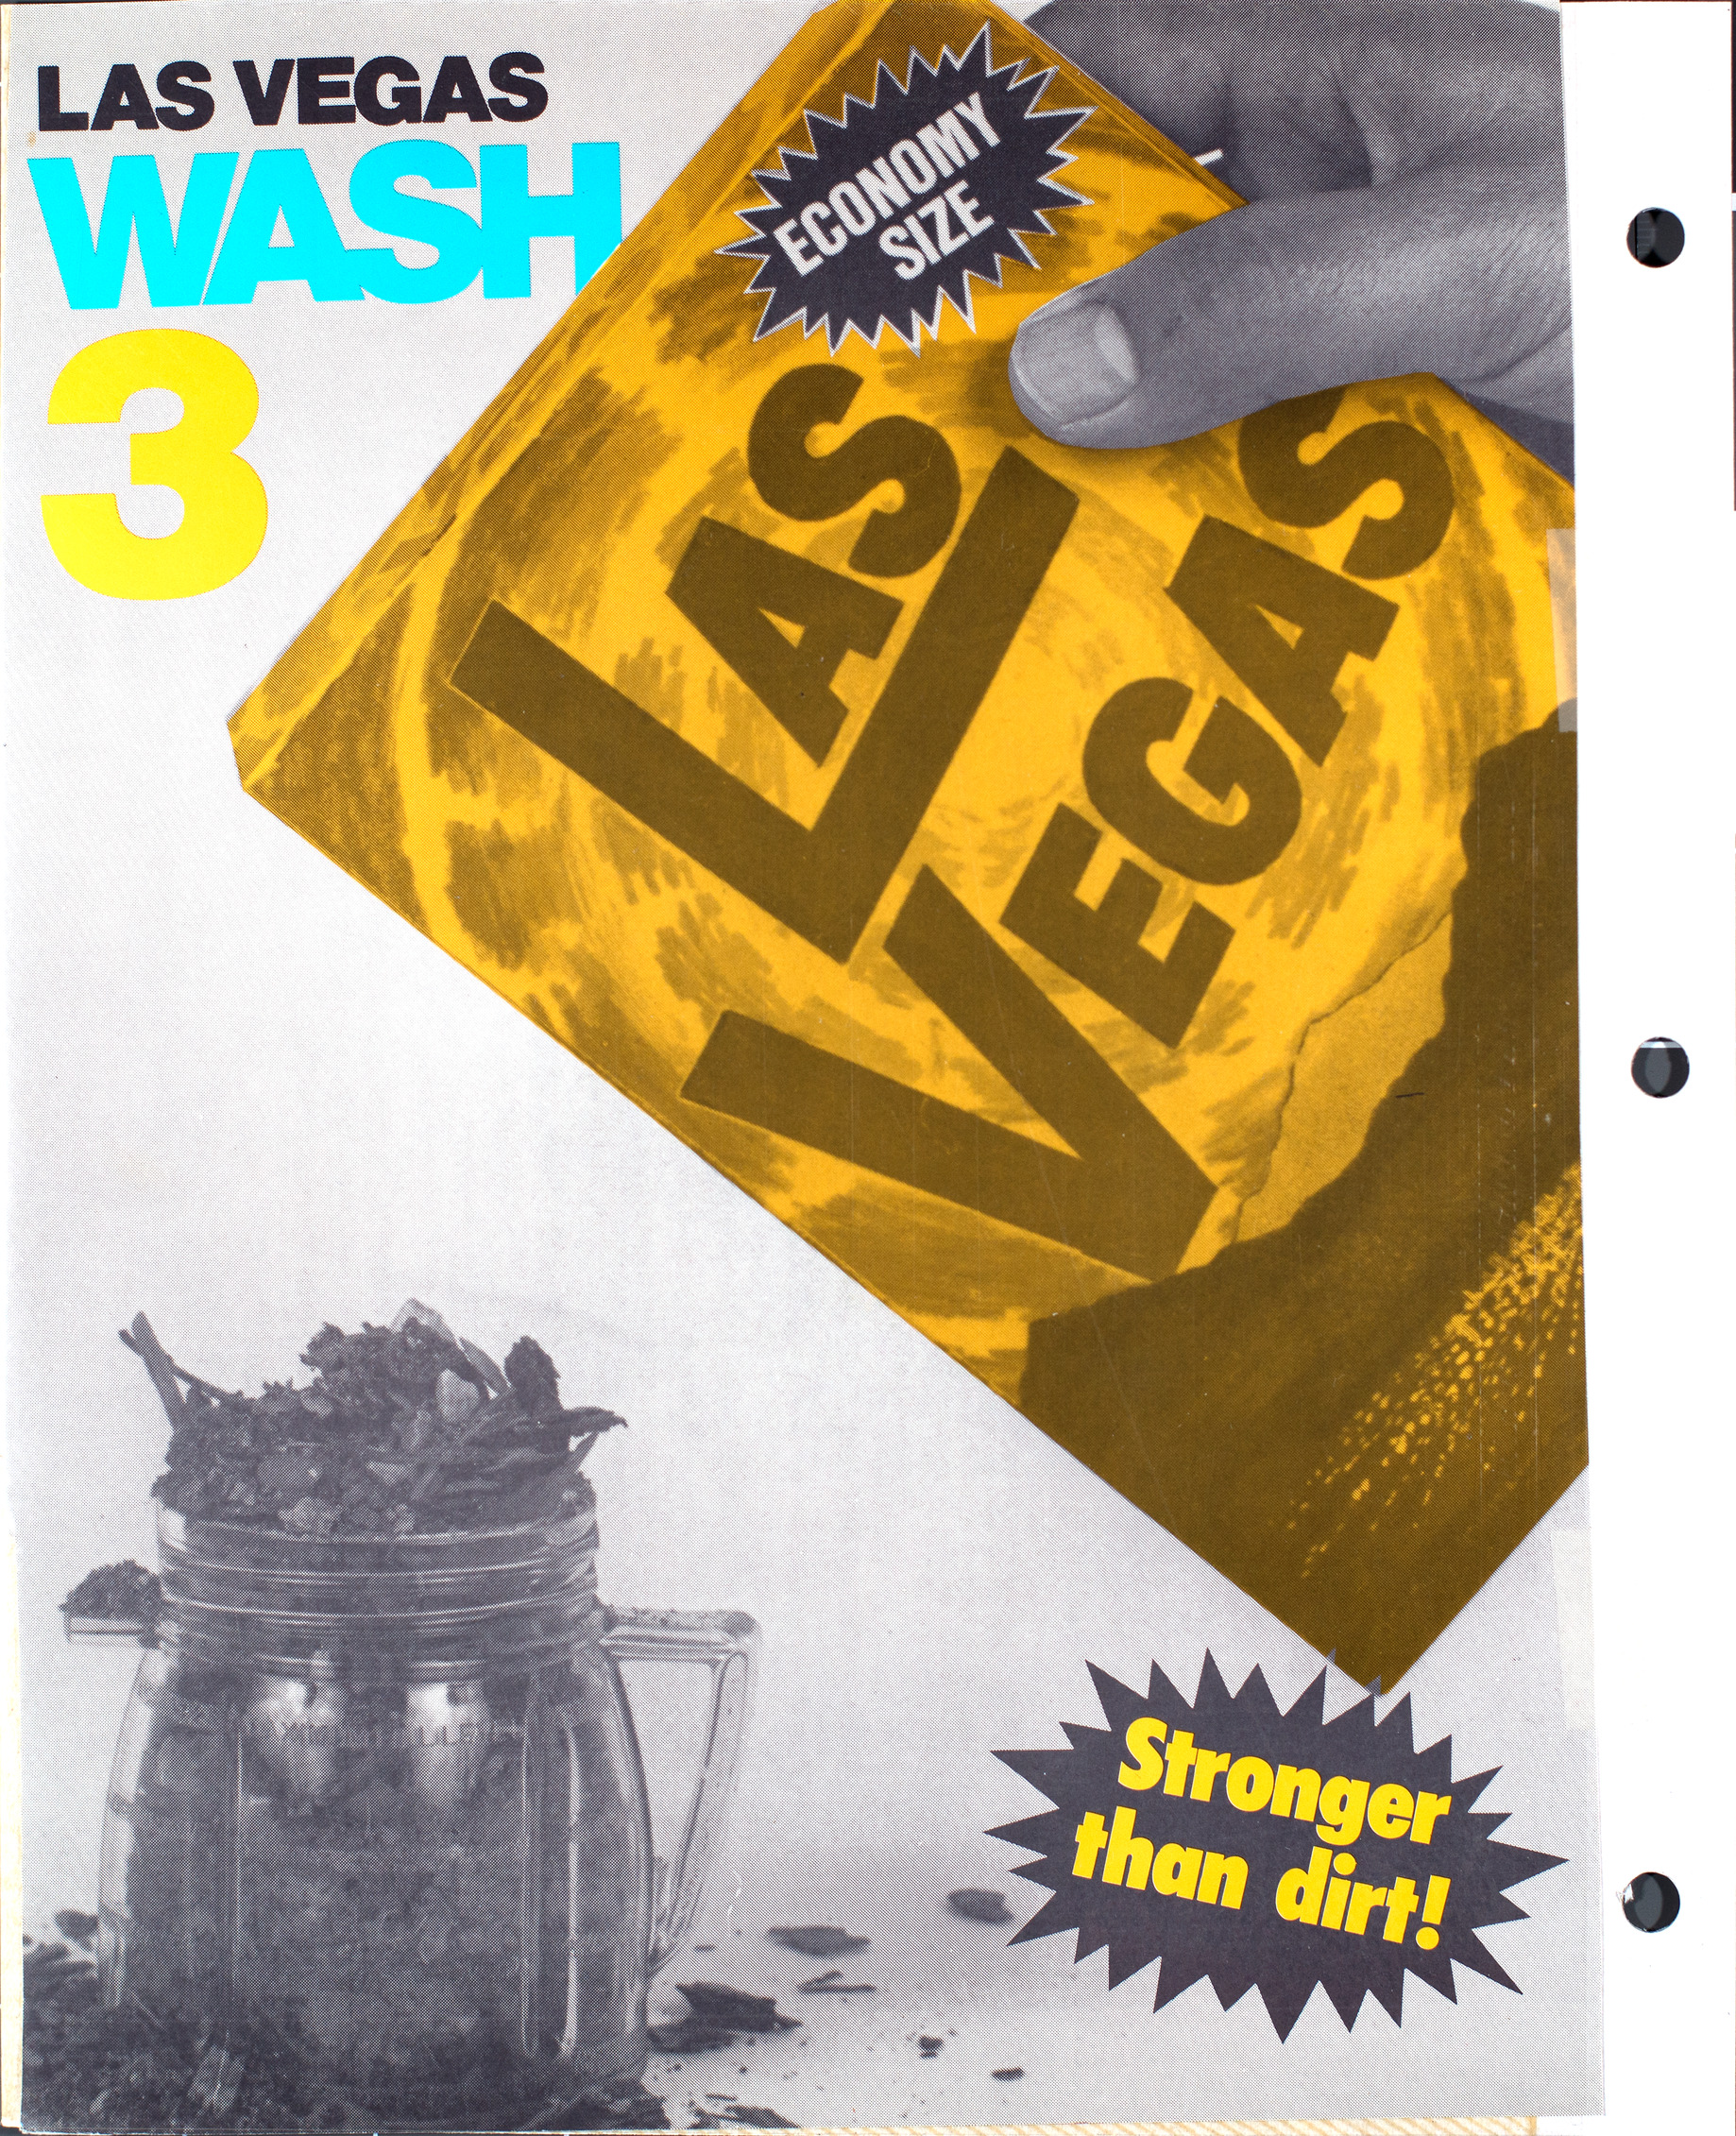 Advertisement for Las Vegas Wash 3